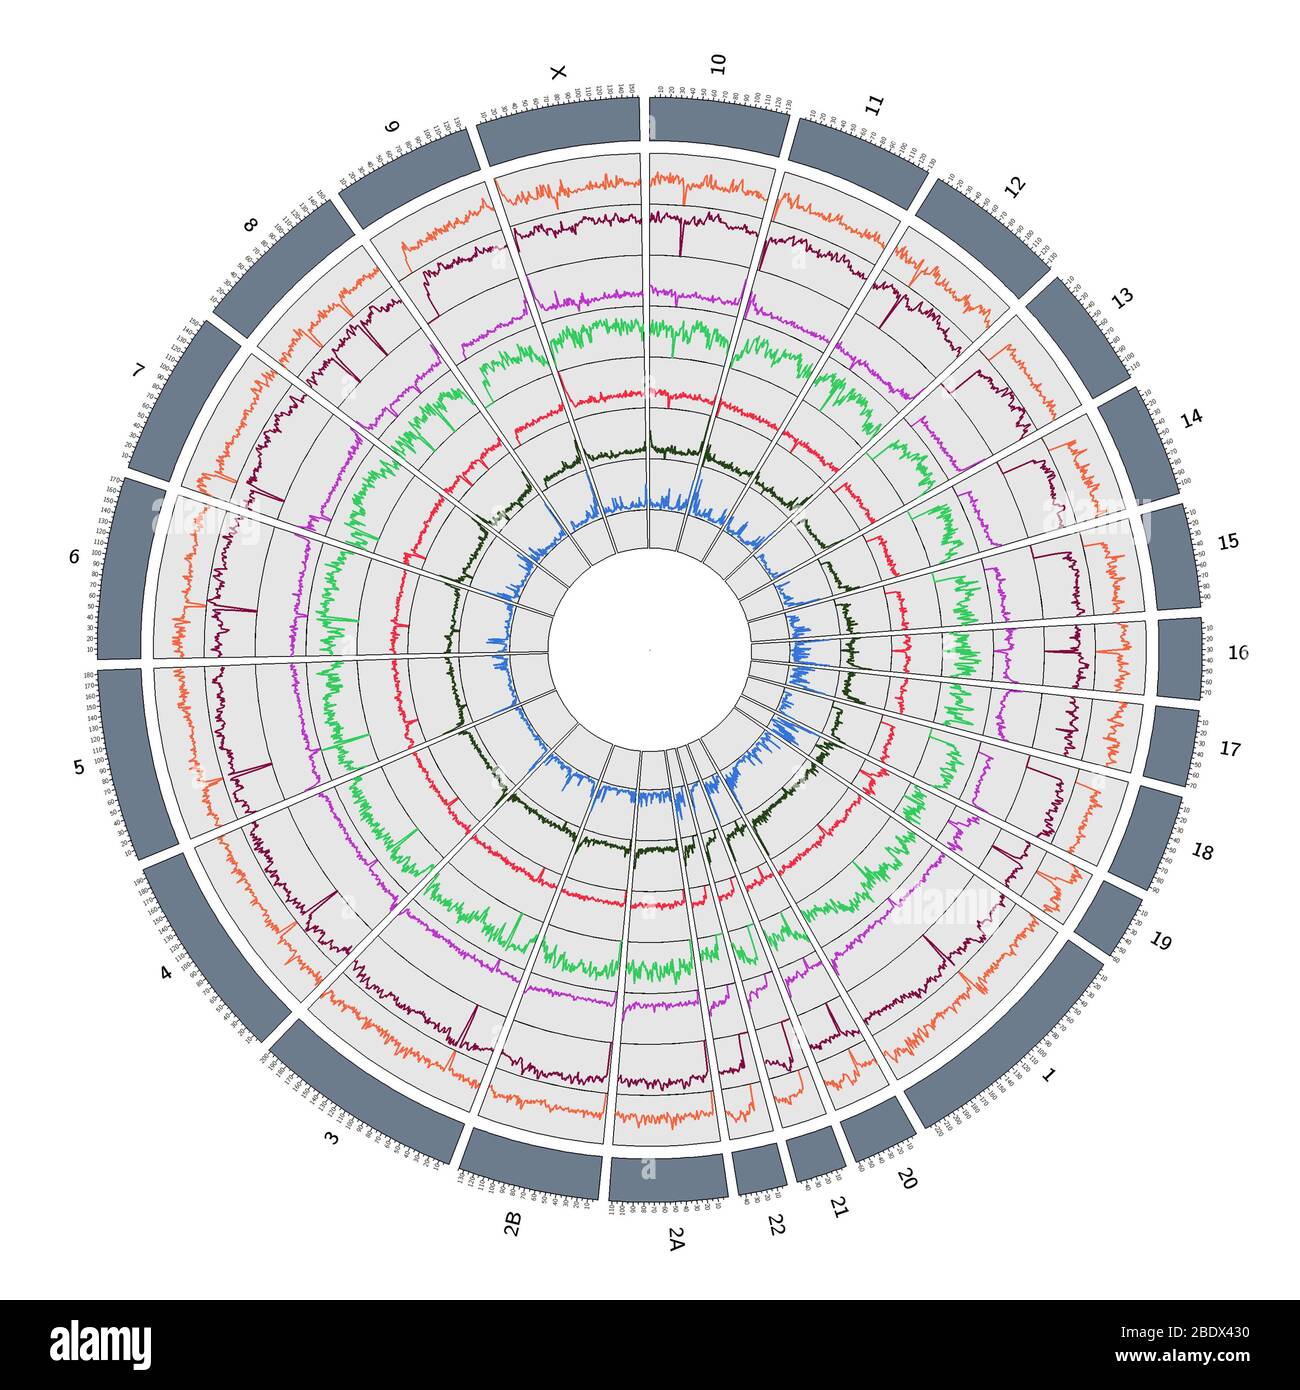 Circos, Circular Genome Map, Orangutan Stock Photo